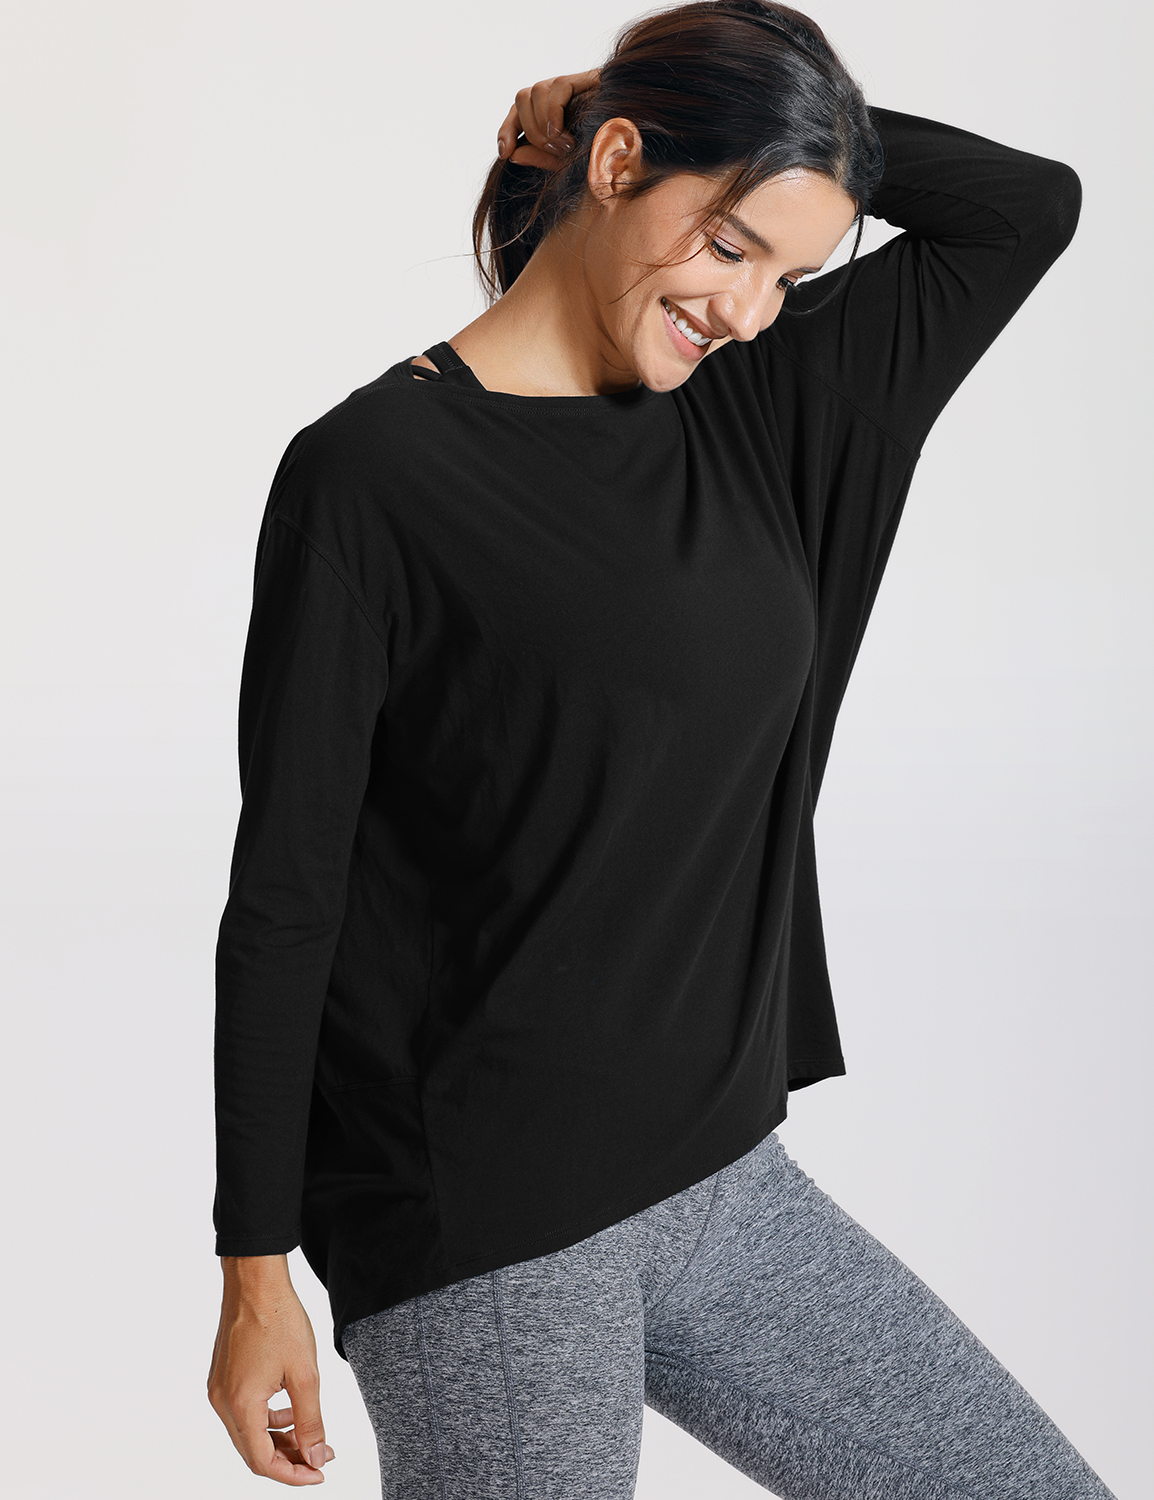 CRZ YOGA Women's Lightweight Quick Dry Long Sleeve Yoga Shirts Athleisure  Tops Gym Sports T-Shirt Black 10 - ShopStyle